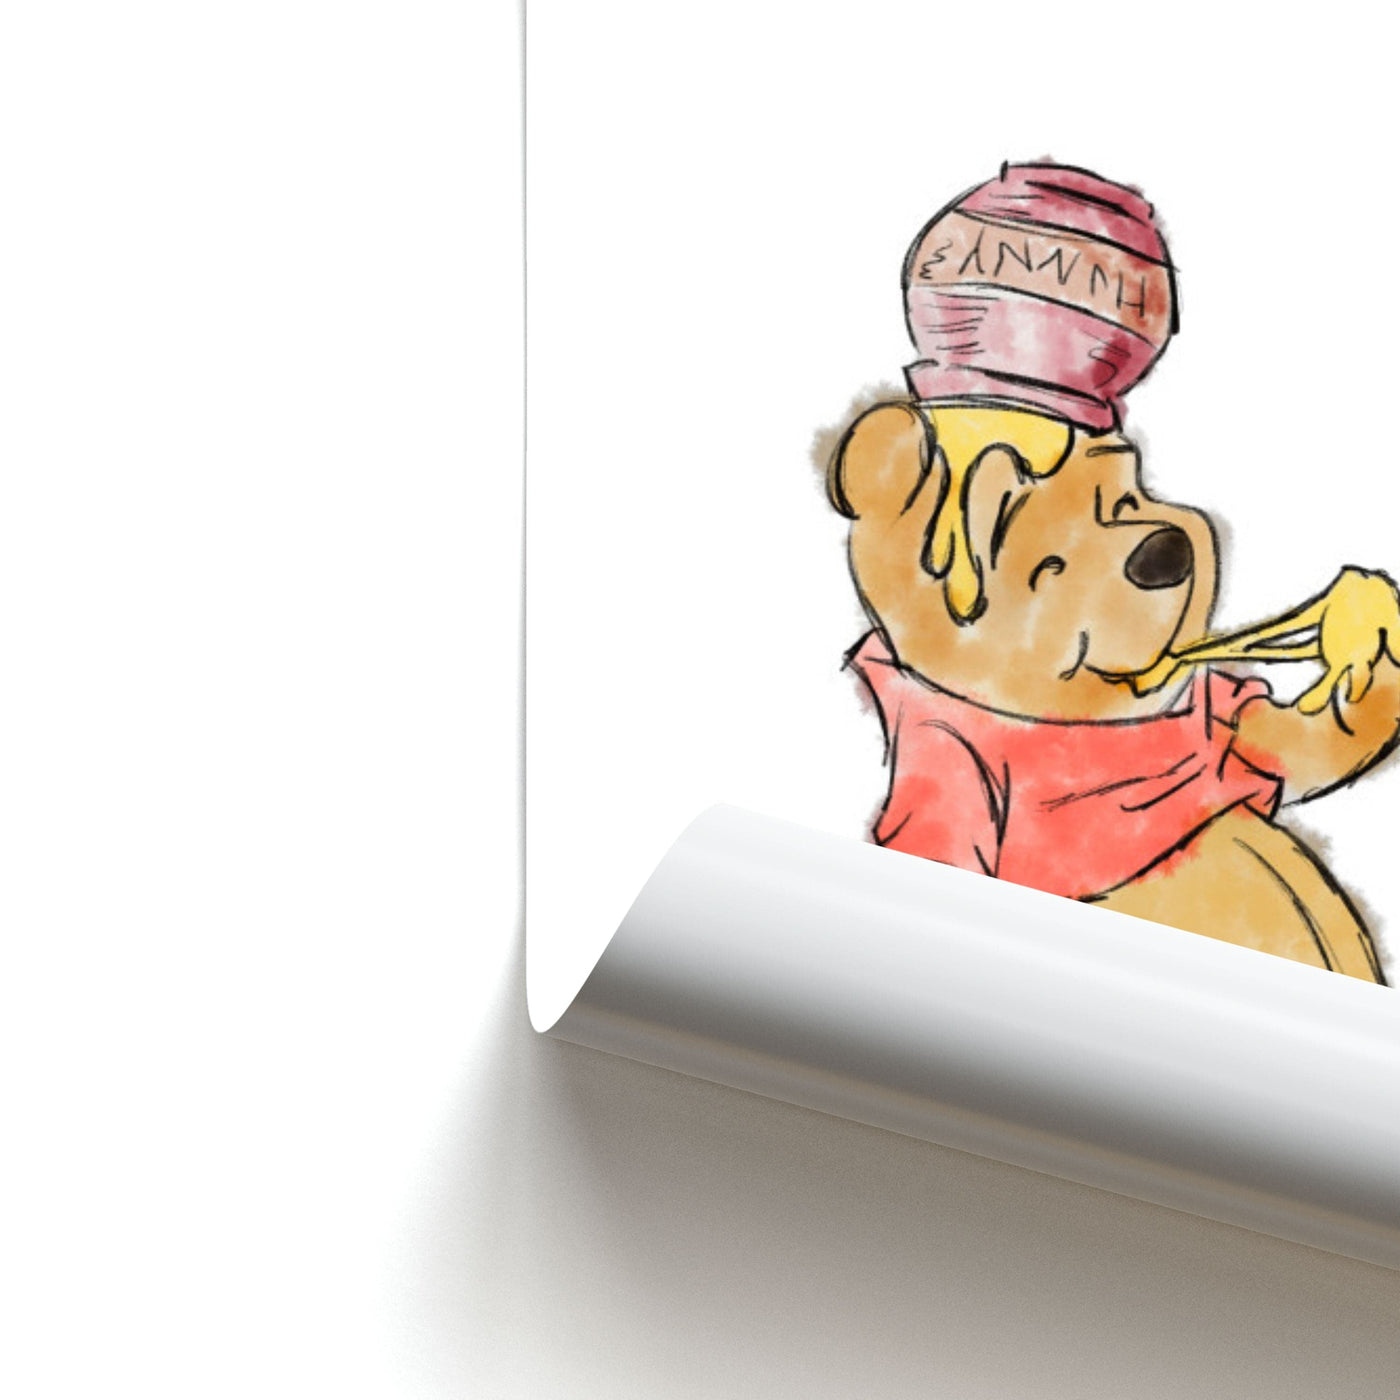 Winnie The Pooh Sketch - Disney Poster